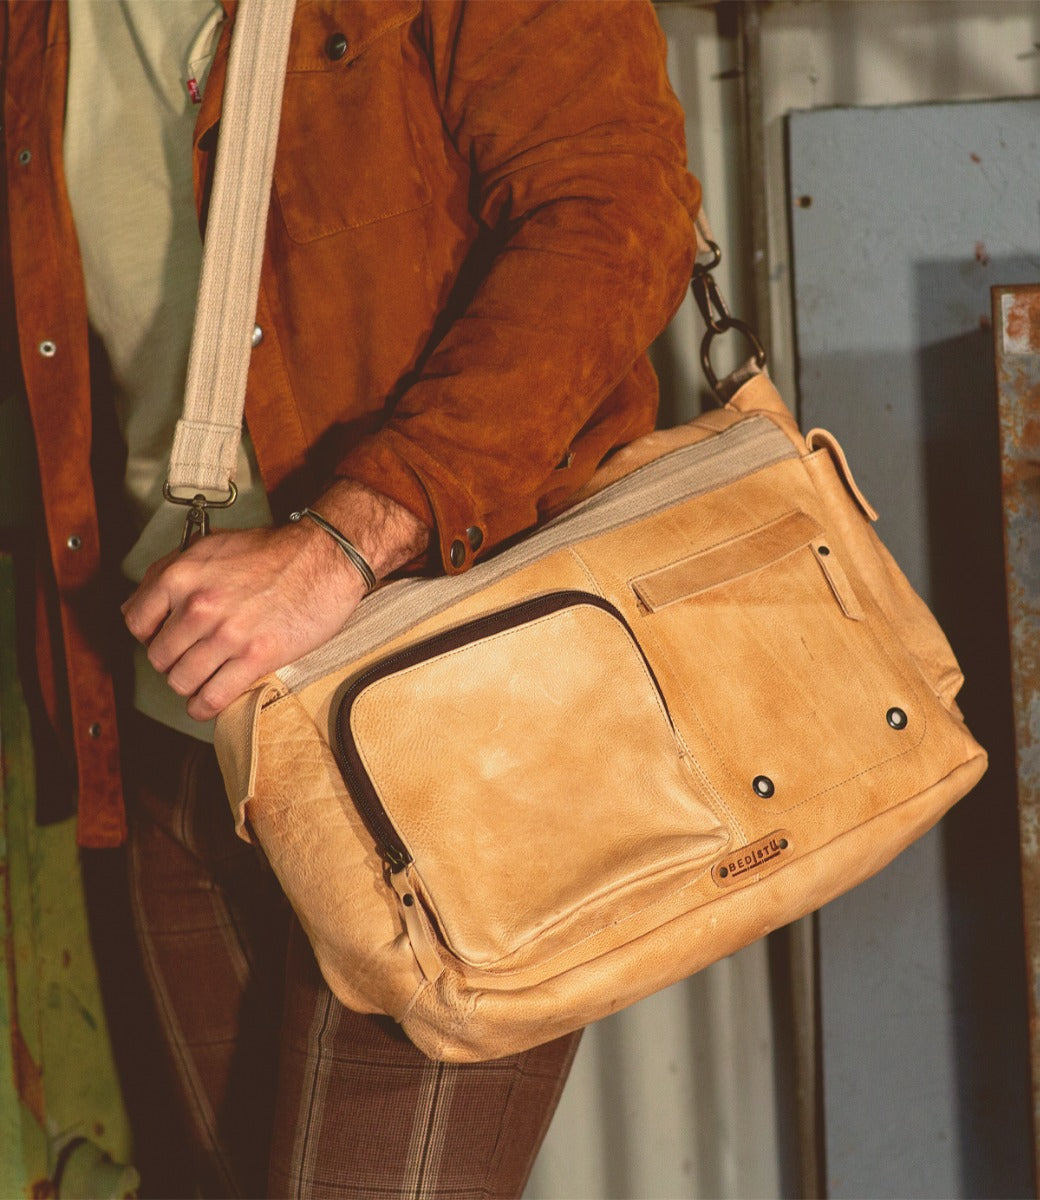 A man is holding a Bed Stu Hawkeye II tan leather messenger bag.